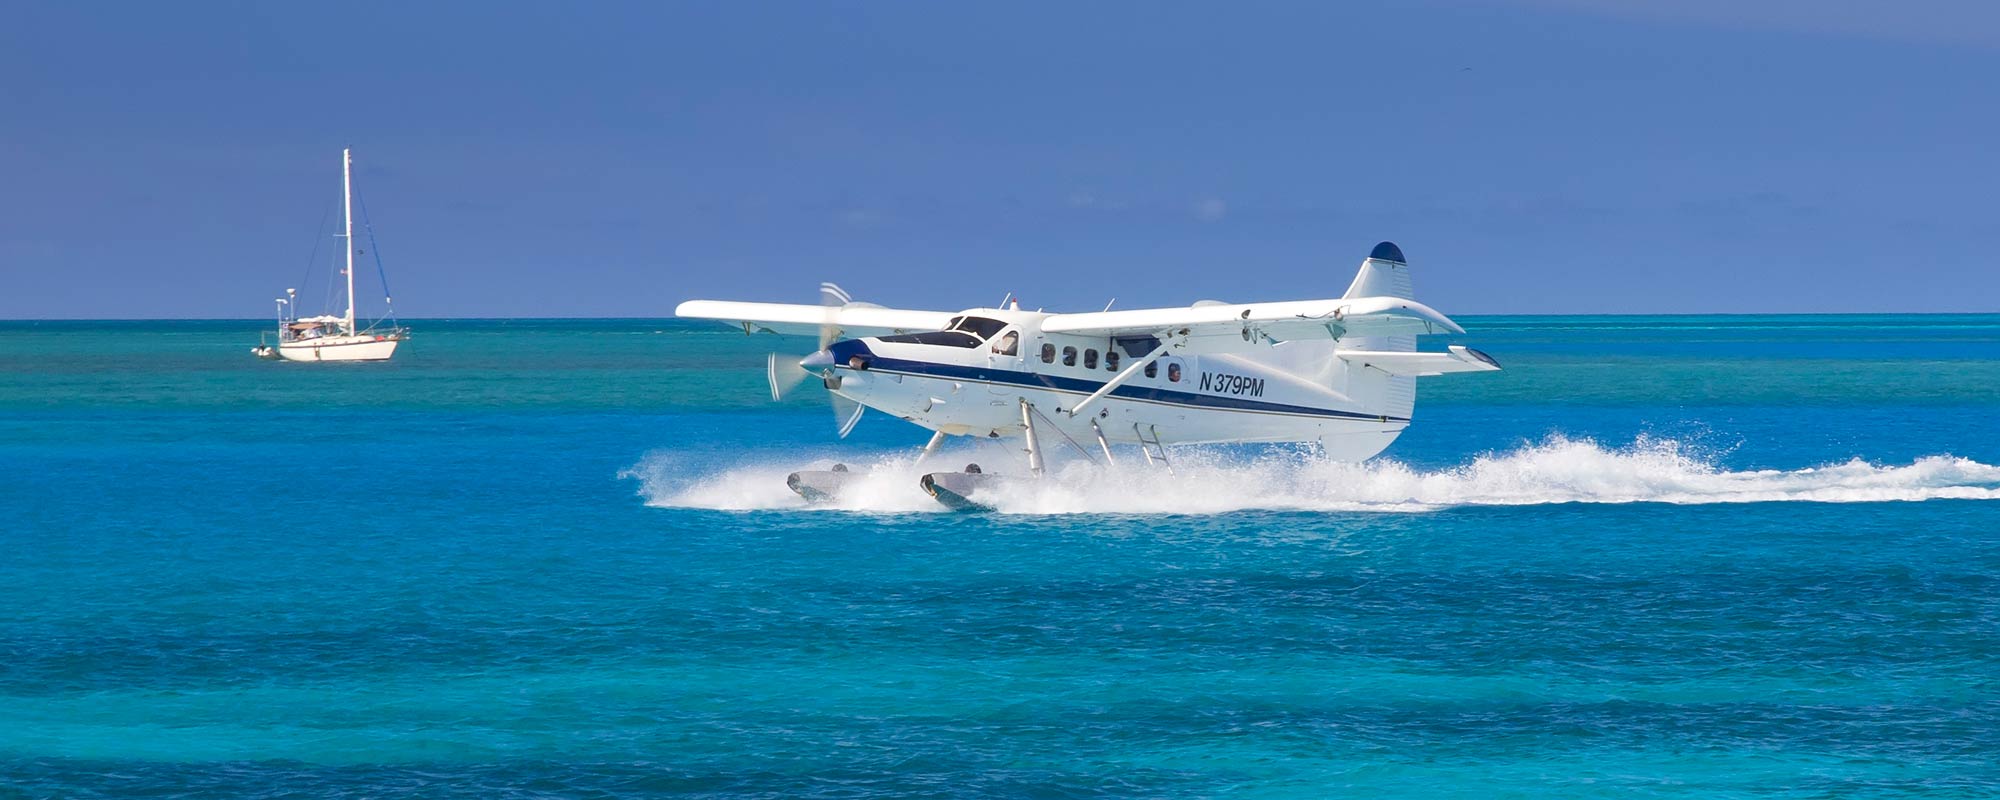 Seaplane landing on Gulf of Mexico